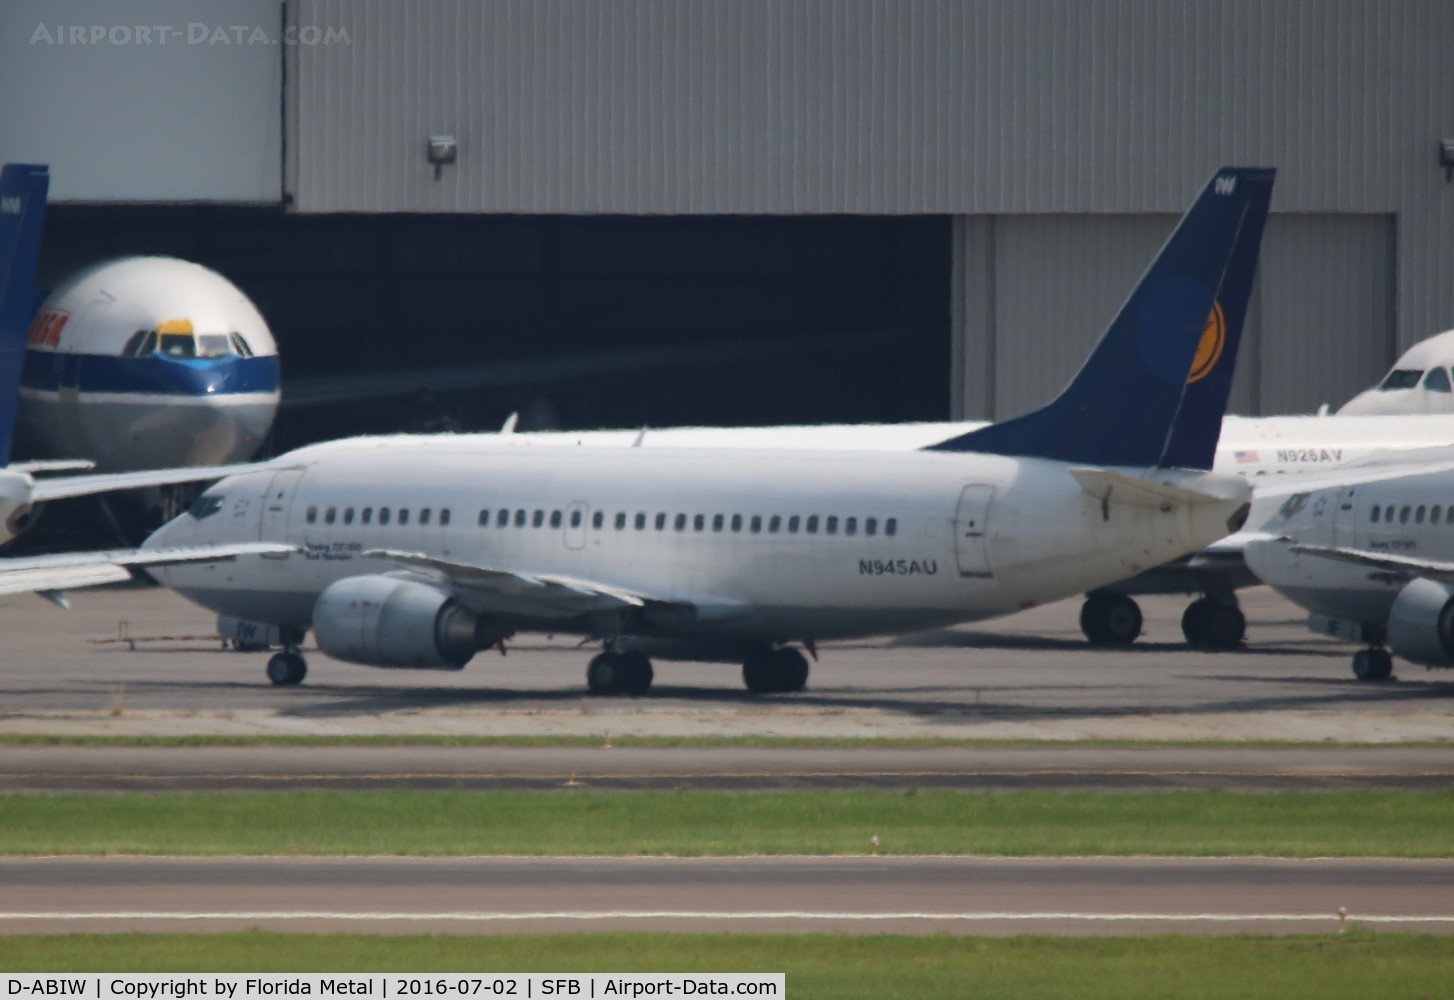 D-ABIW, 1991 Boeing 737-530 C/N 24945, Lufthansa